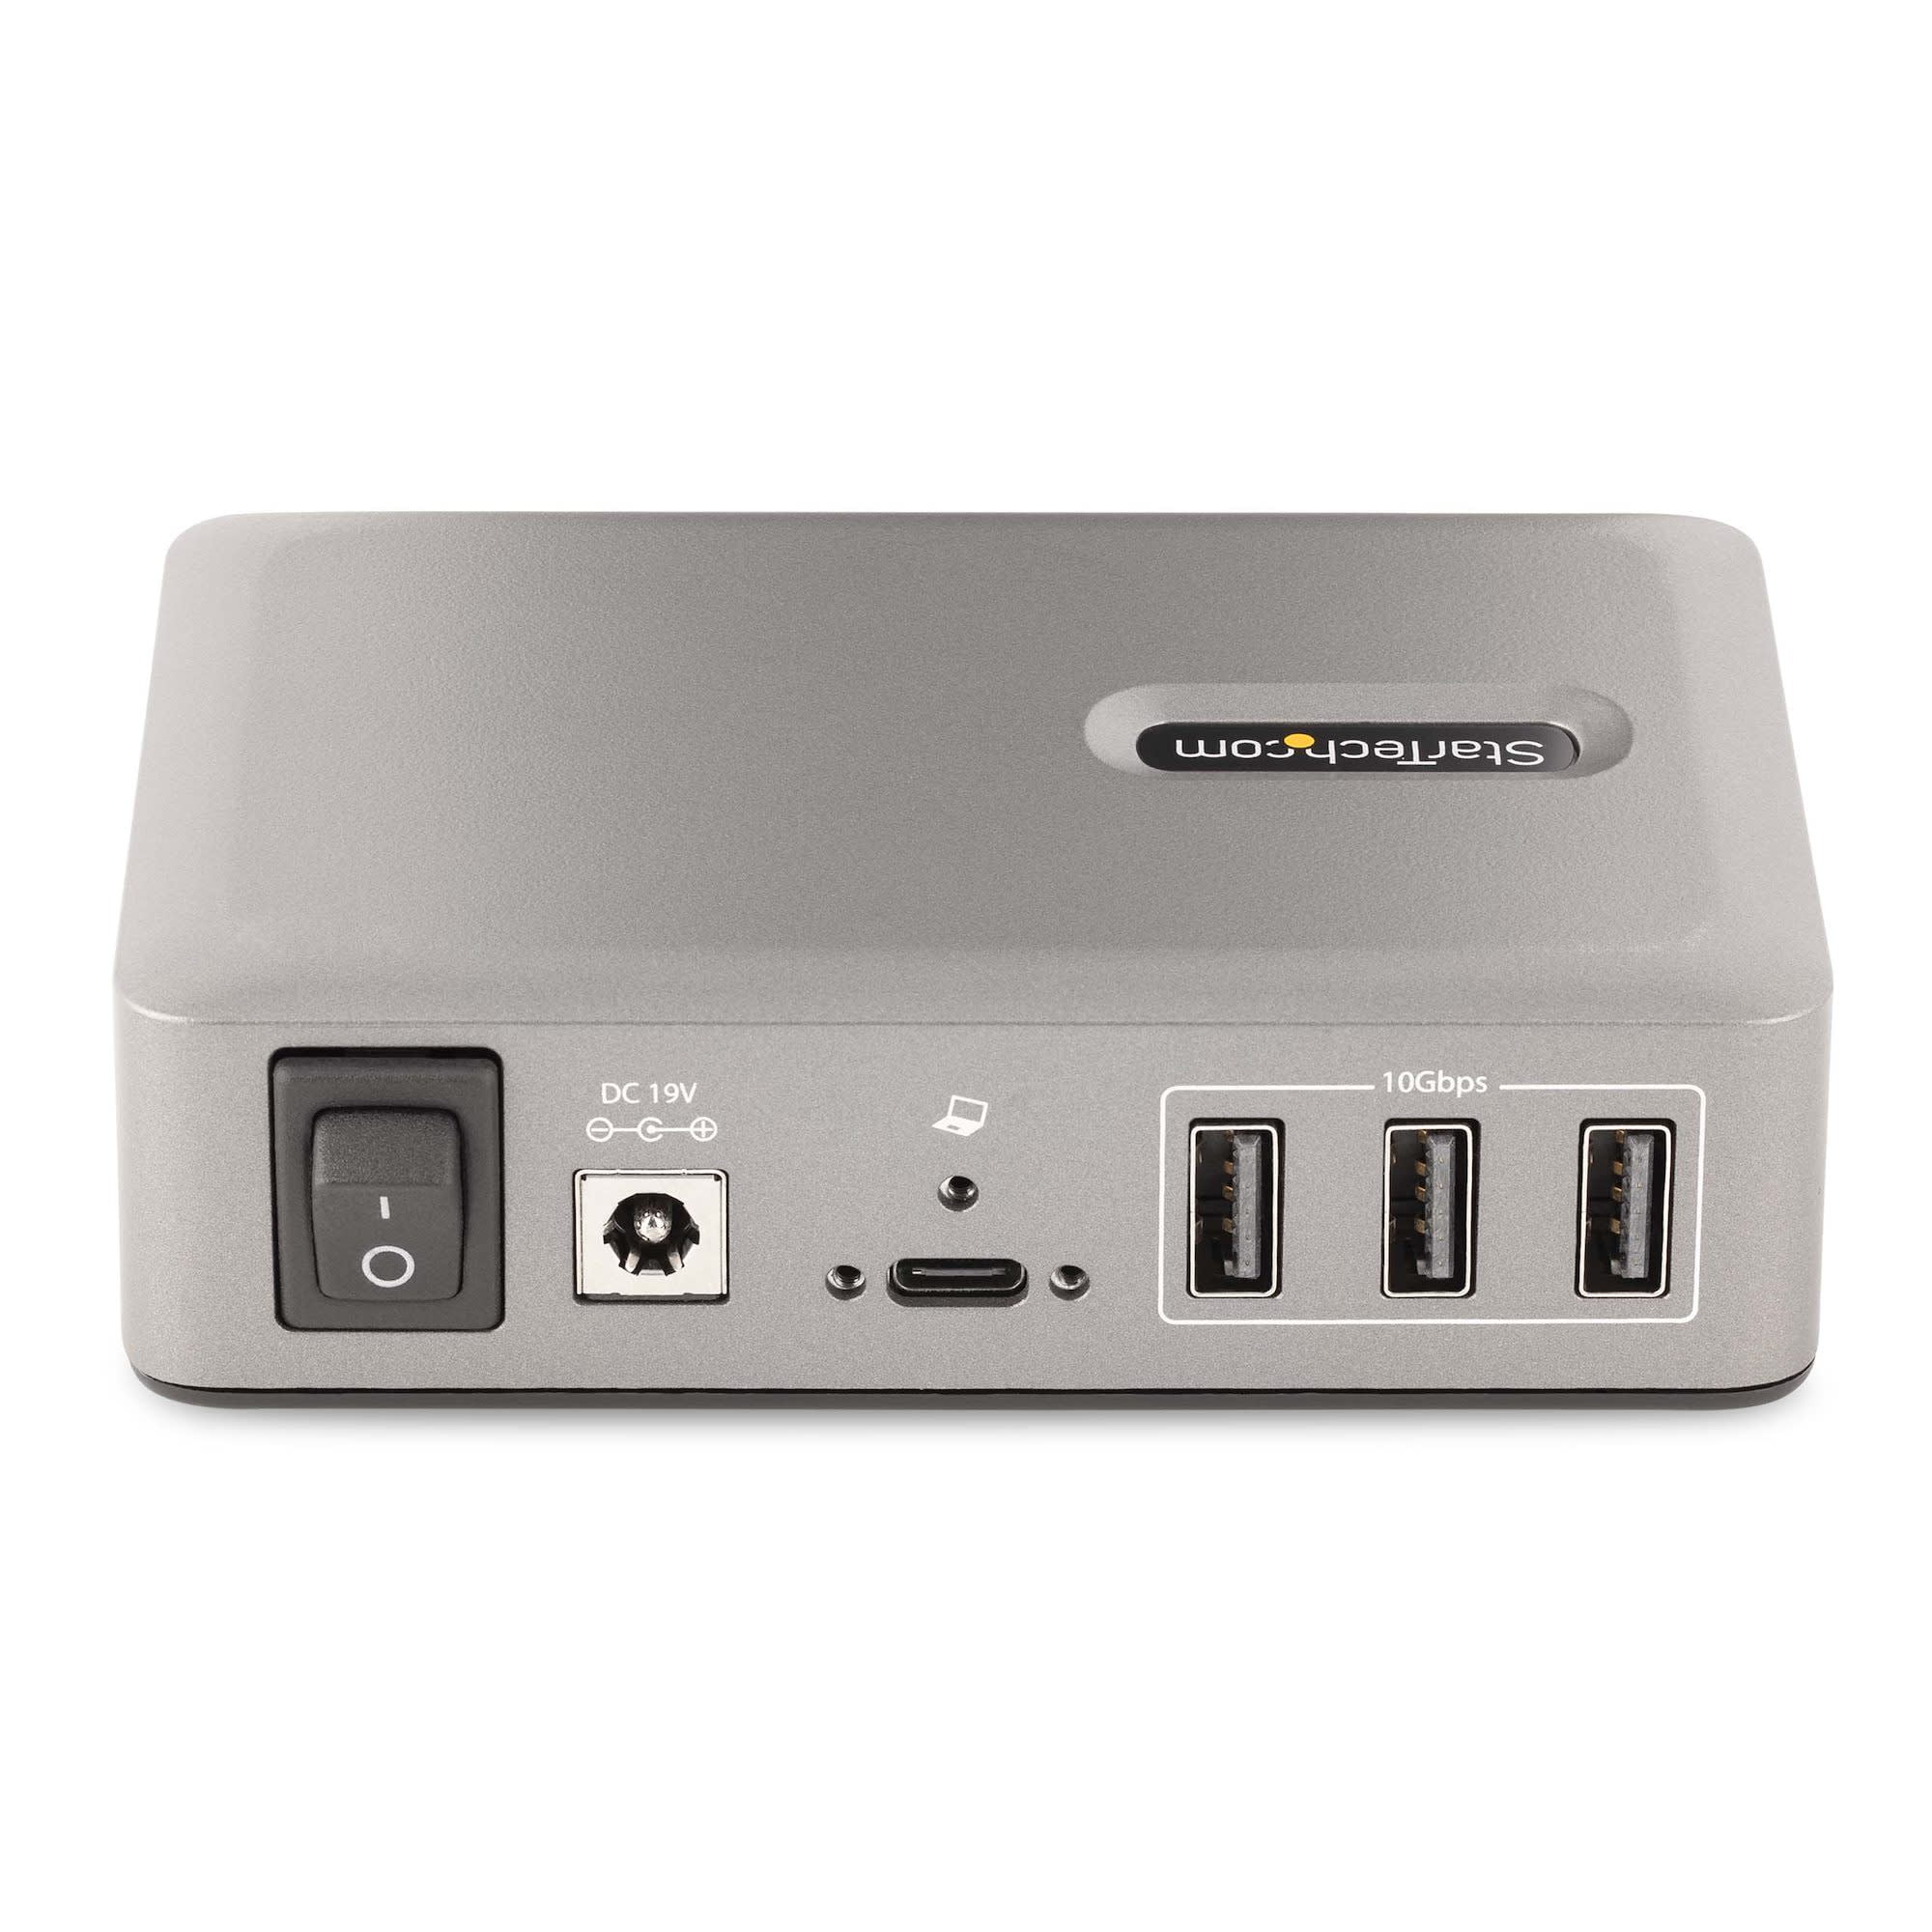 Lenovo USB-C 3-in-1 Travel Hub, 4K HDMI, VGA, USB 3.0, Simple Plug and Play